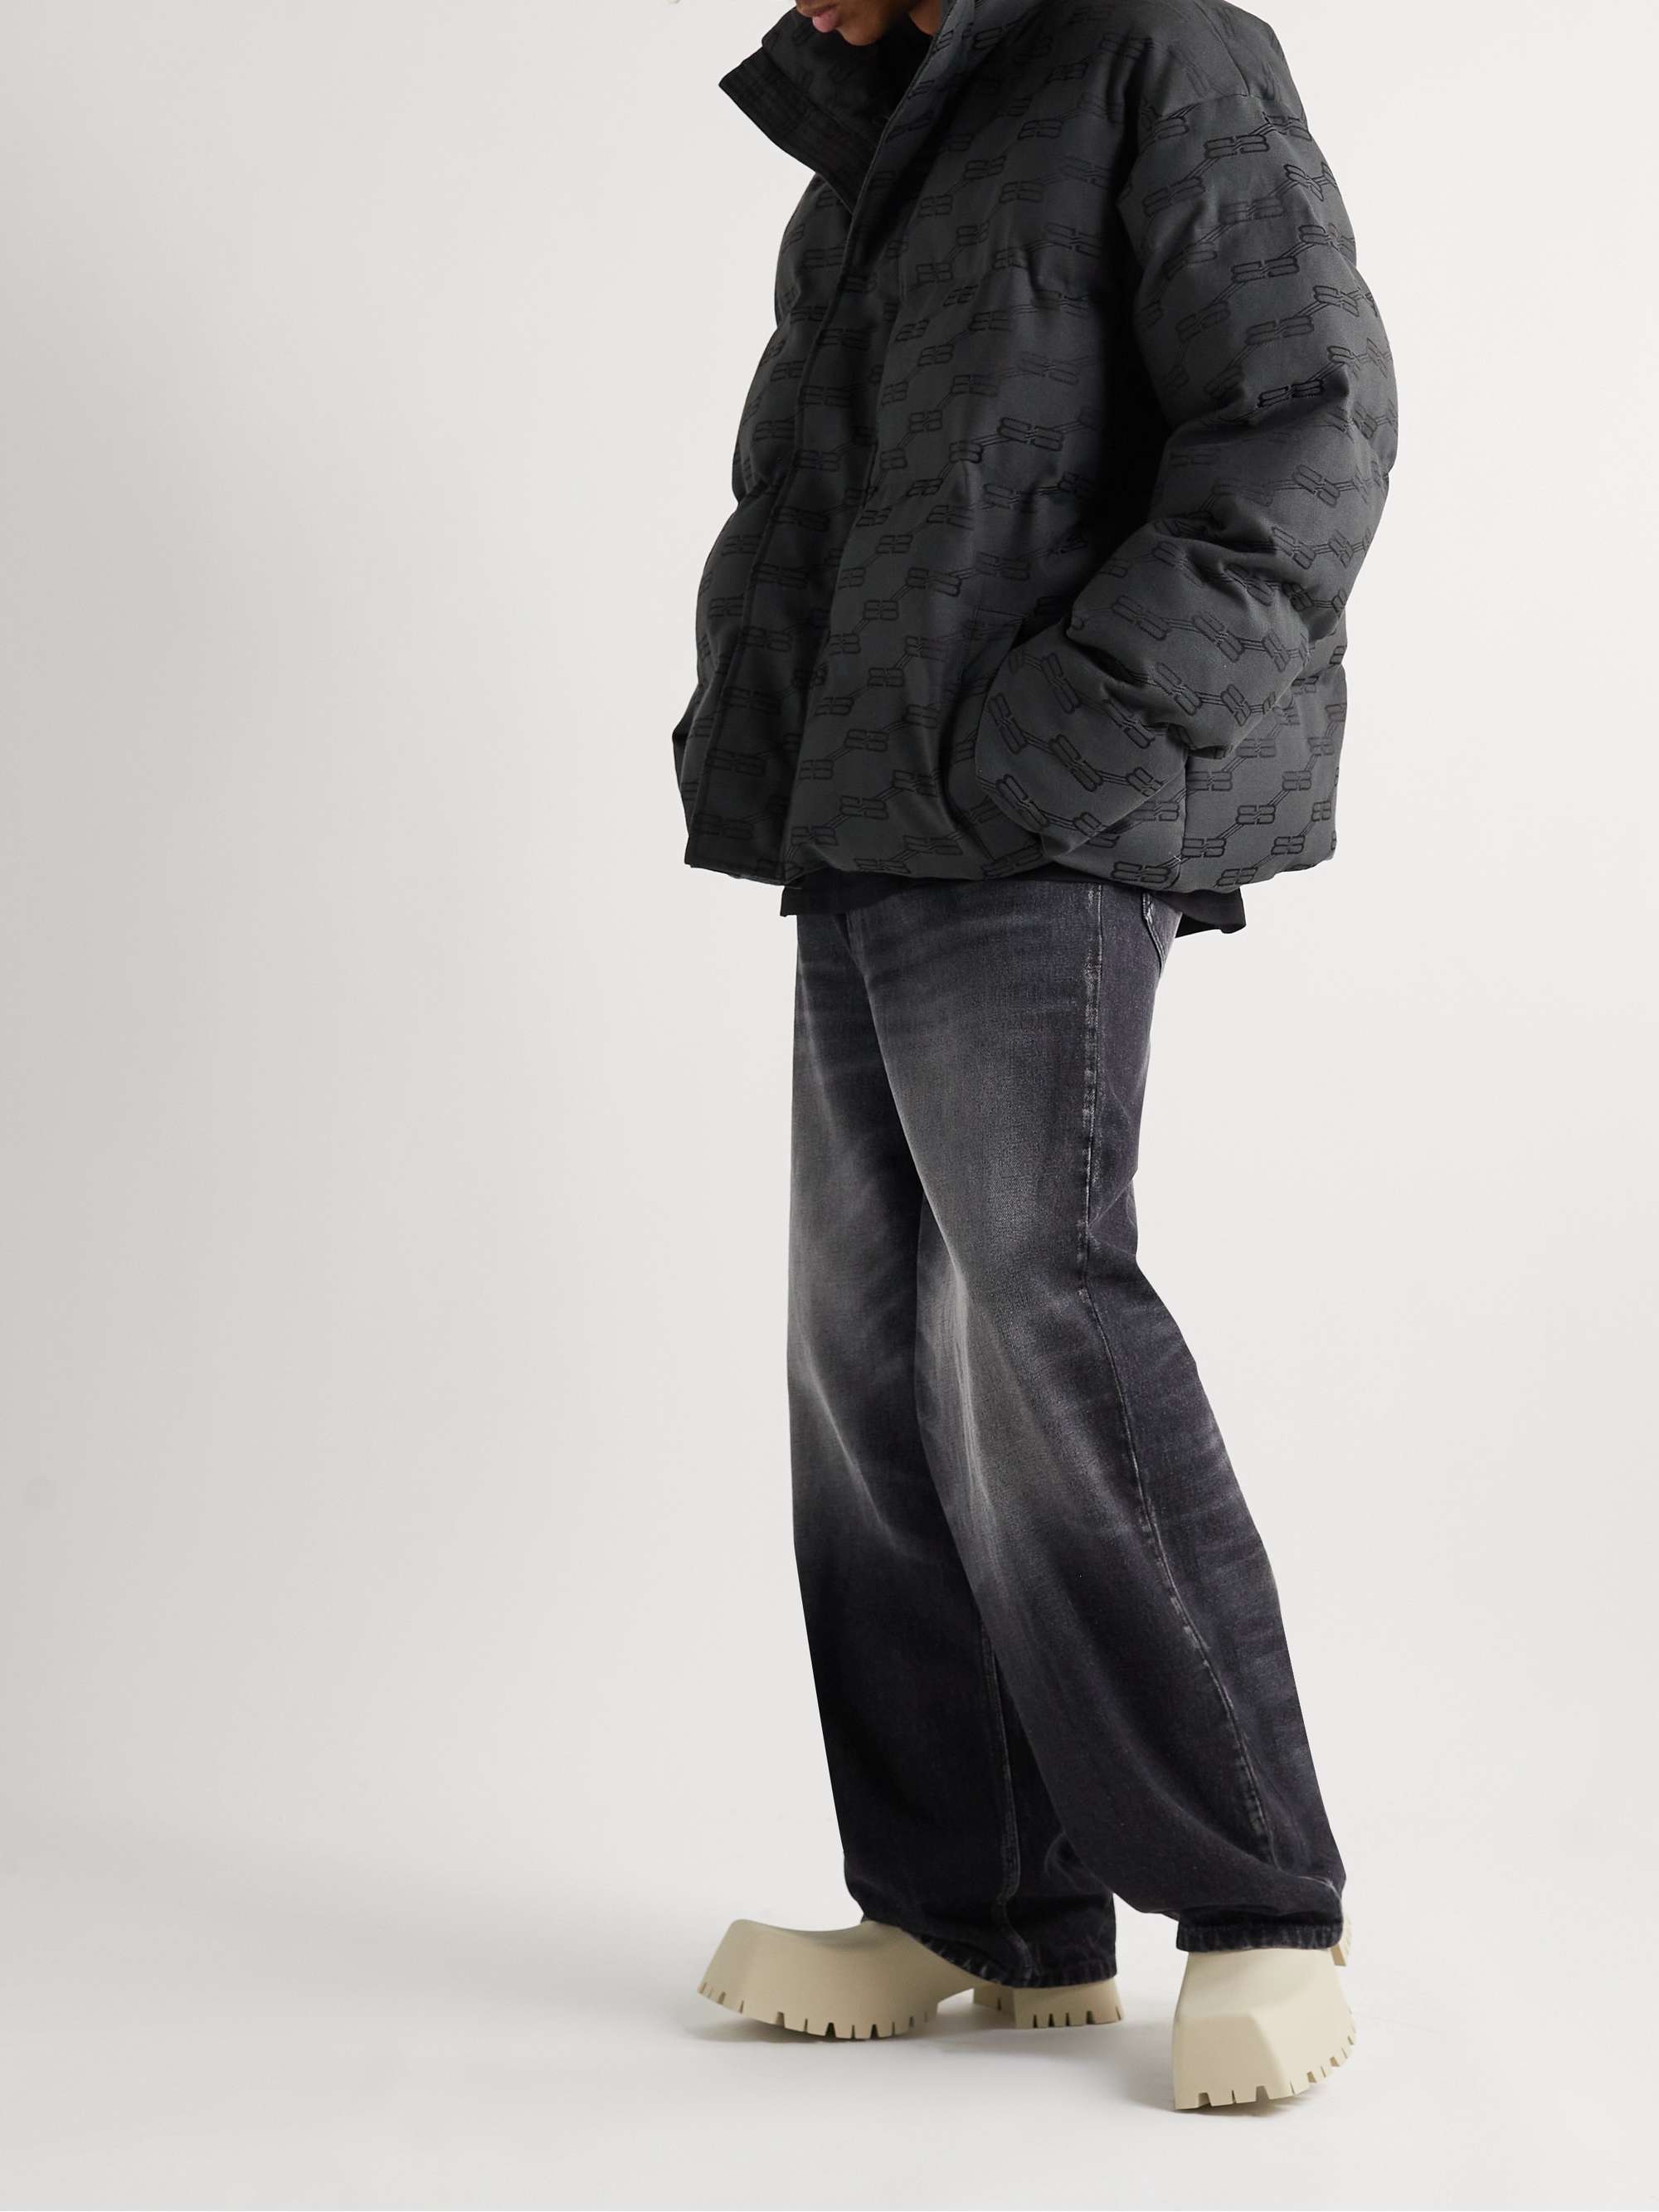 Balenciaga Men's Bb Monogram Puffer Jacket - Black - Size 38